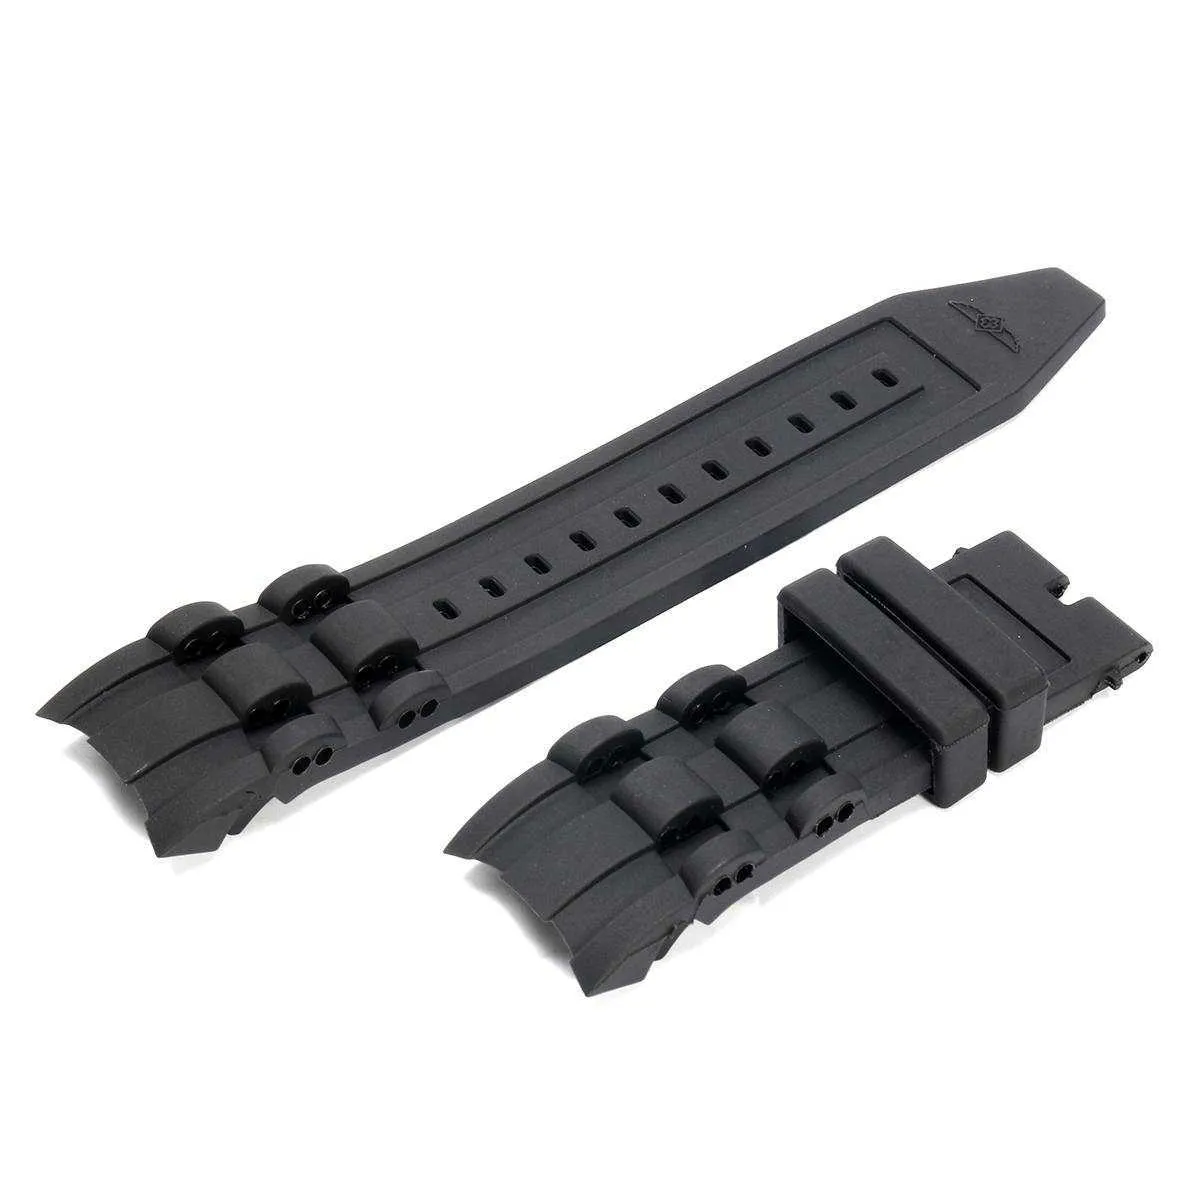 26mm Silicone Gummi Watchband Svart Luxury Mäns Armband Watch Armband Byte Ström Nej Spänne För / Invicta / Pro / Diver H0915